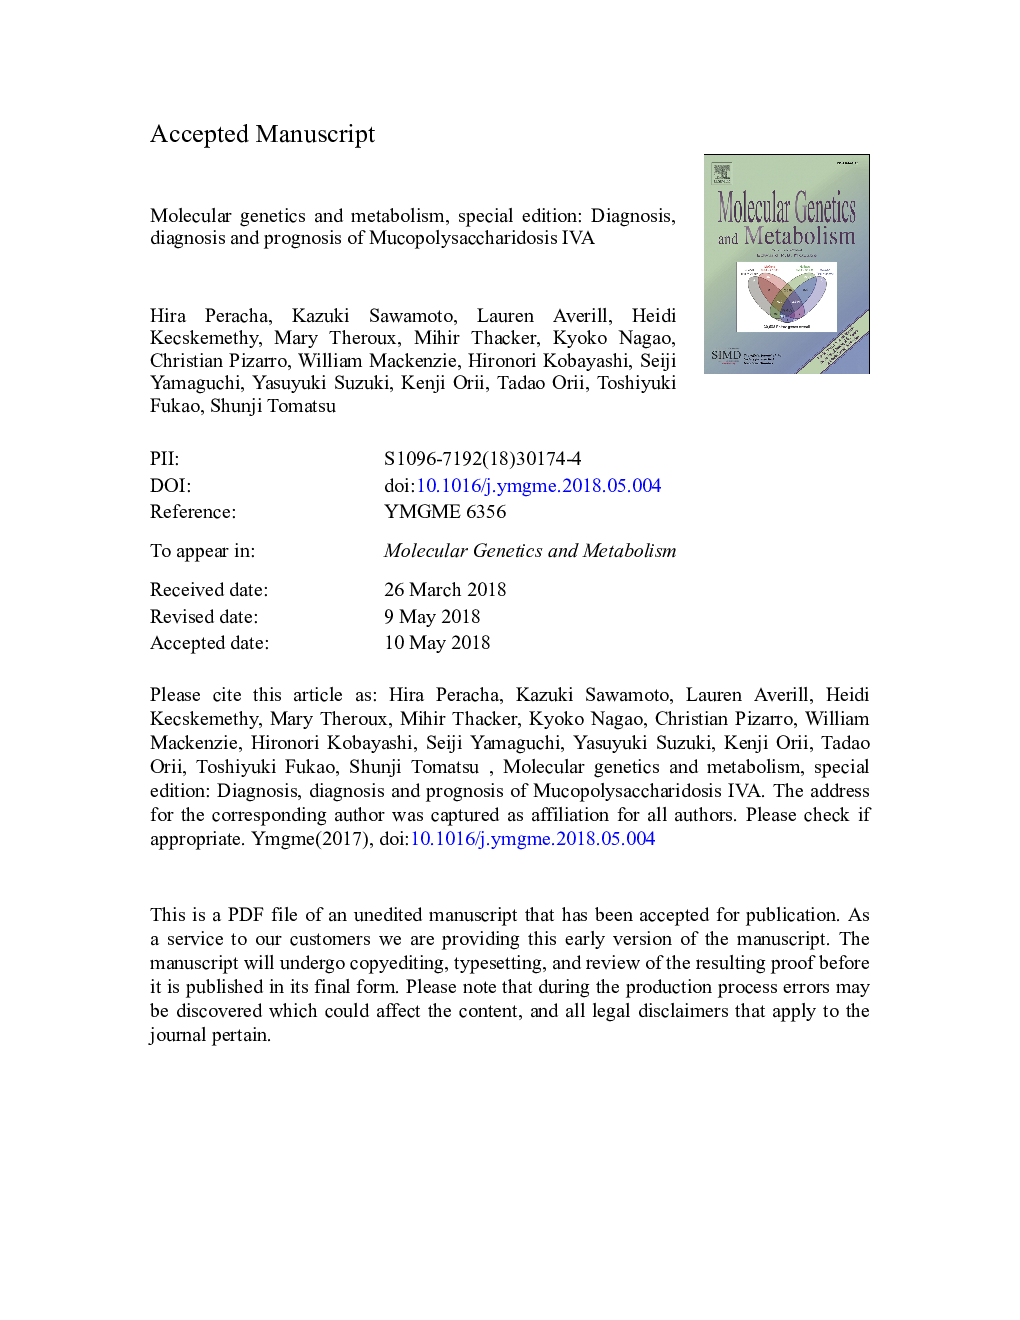 Molecular genetics and metabolism, special edition: Diagnosis, diagnosis and prognosis of Mucopolysaccharidosis IVA